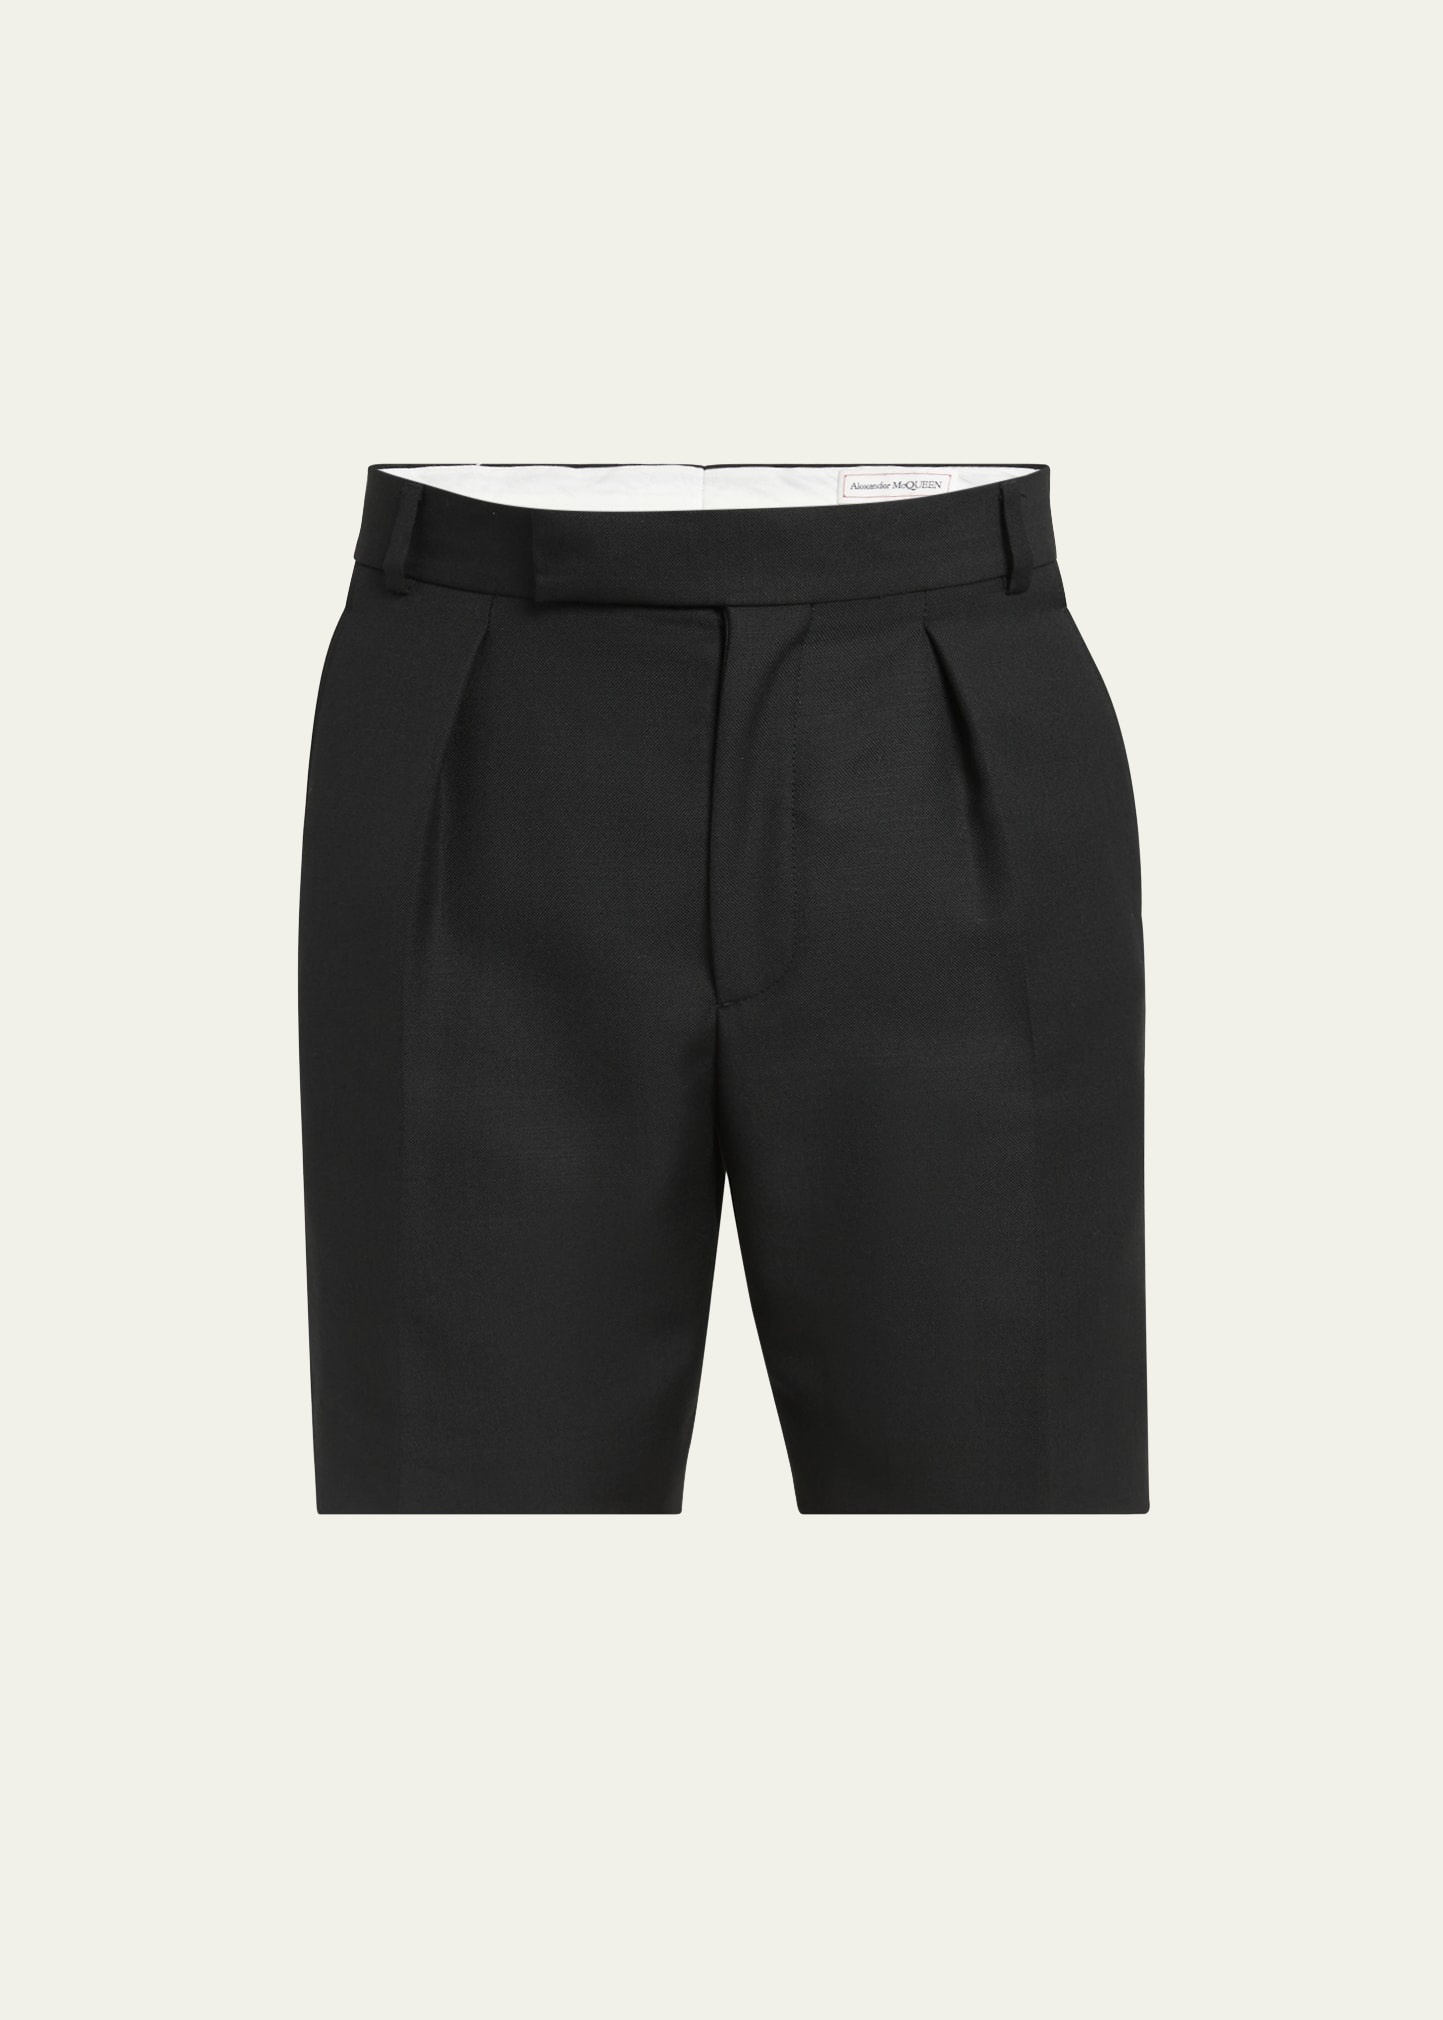 Men's Solid Shorts - 1